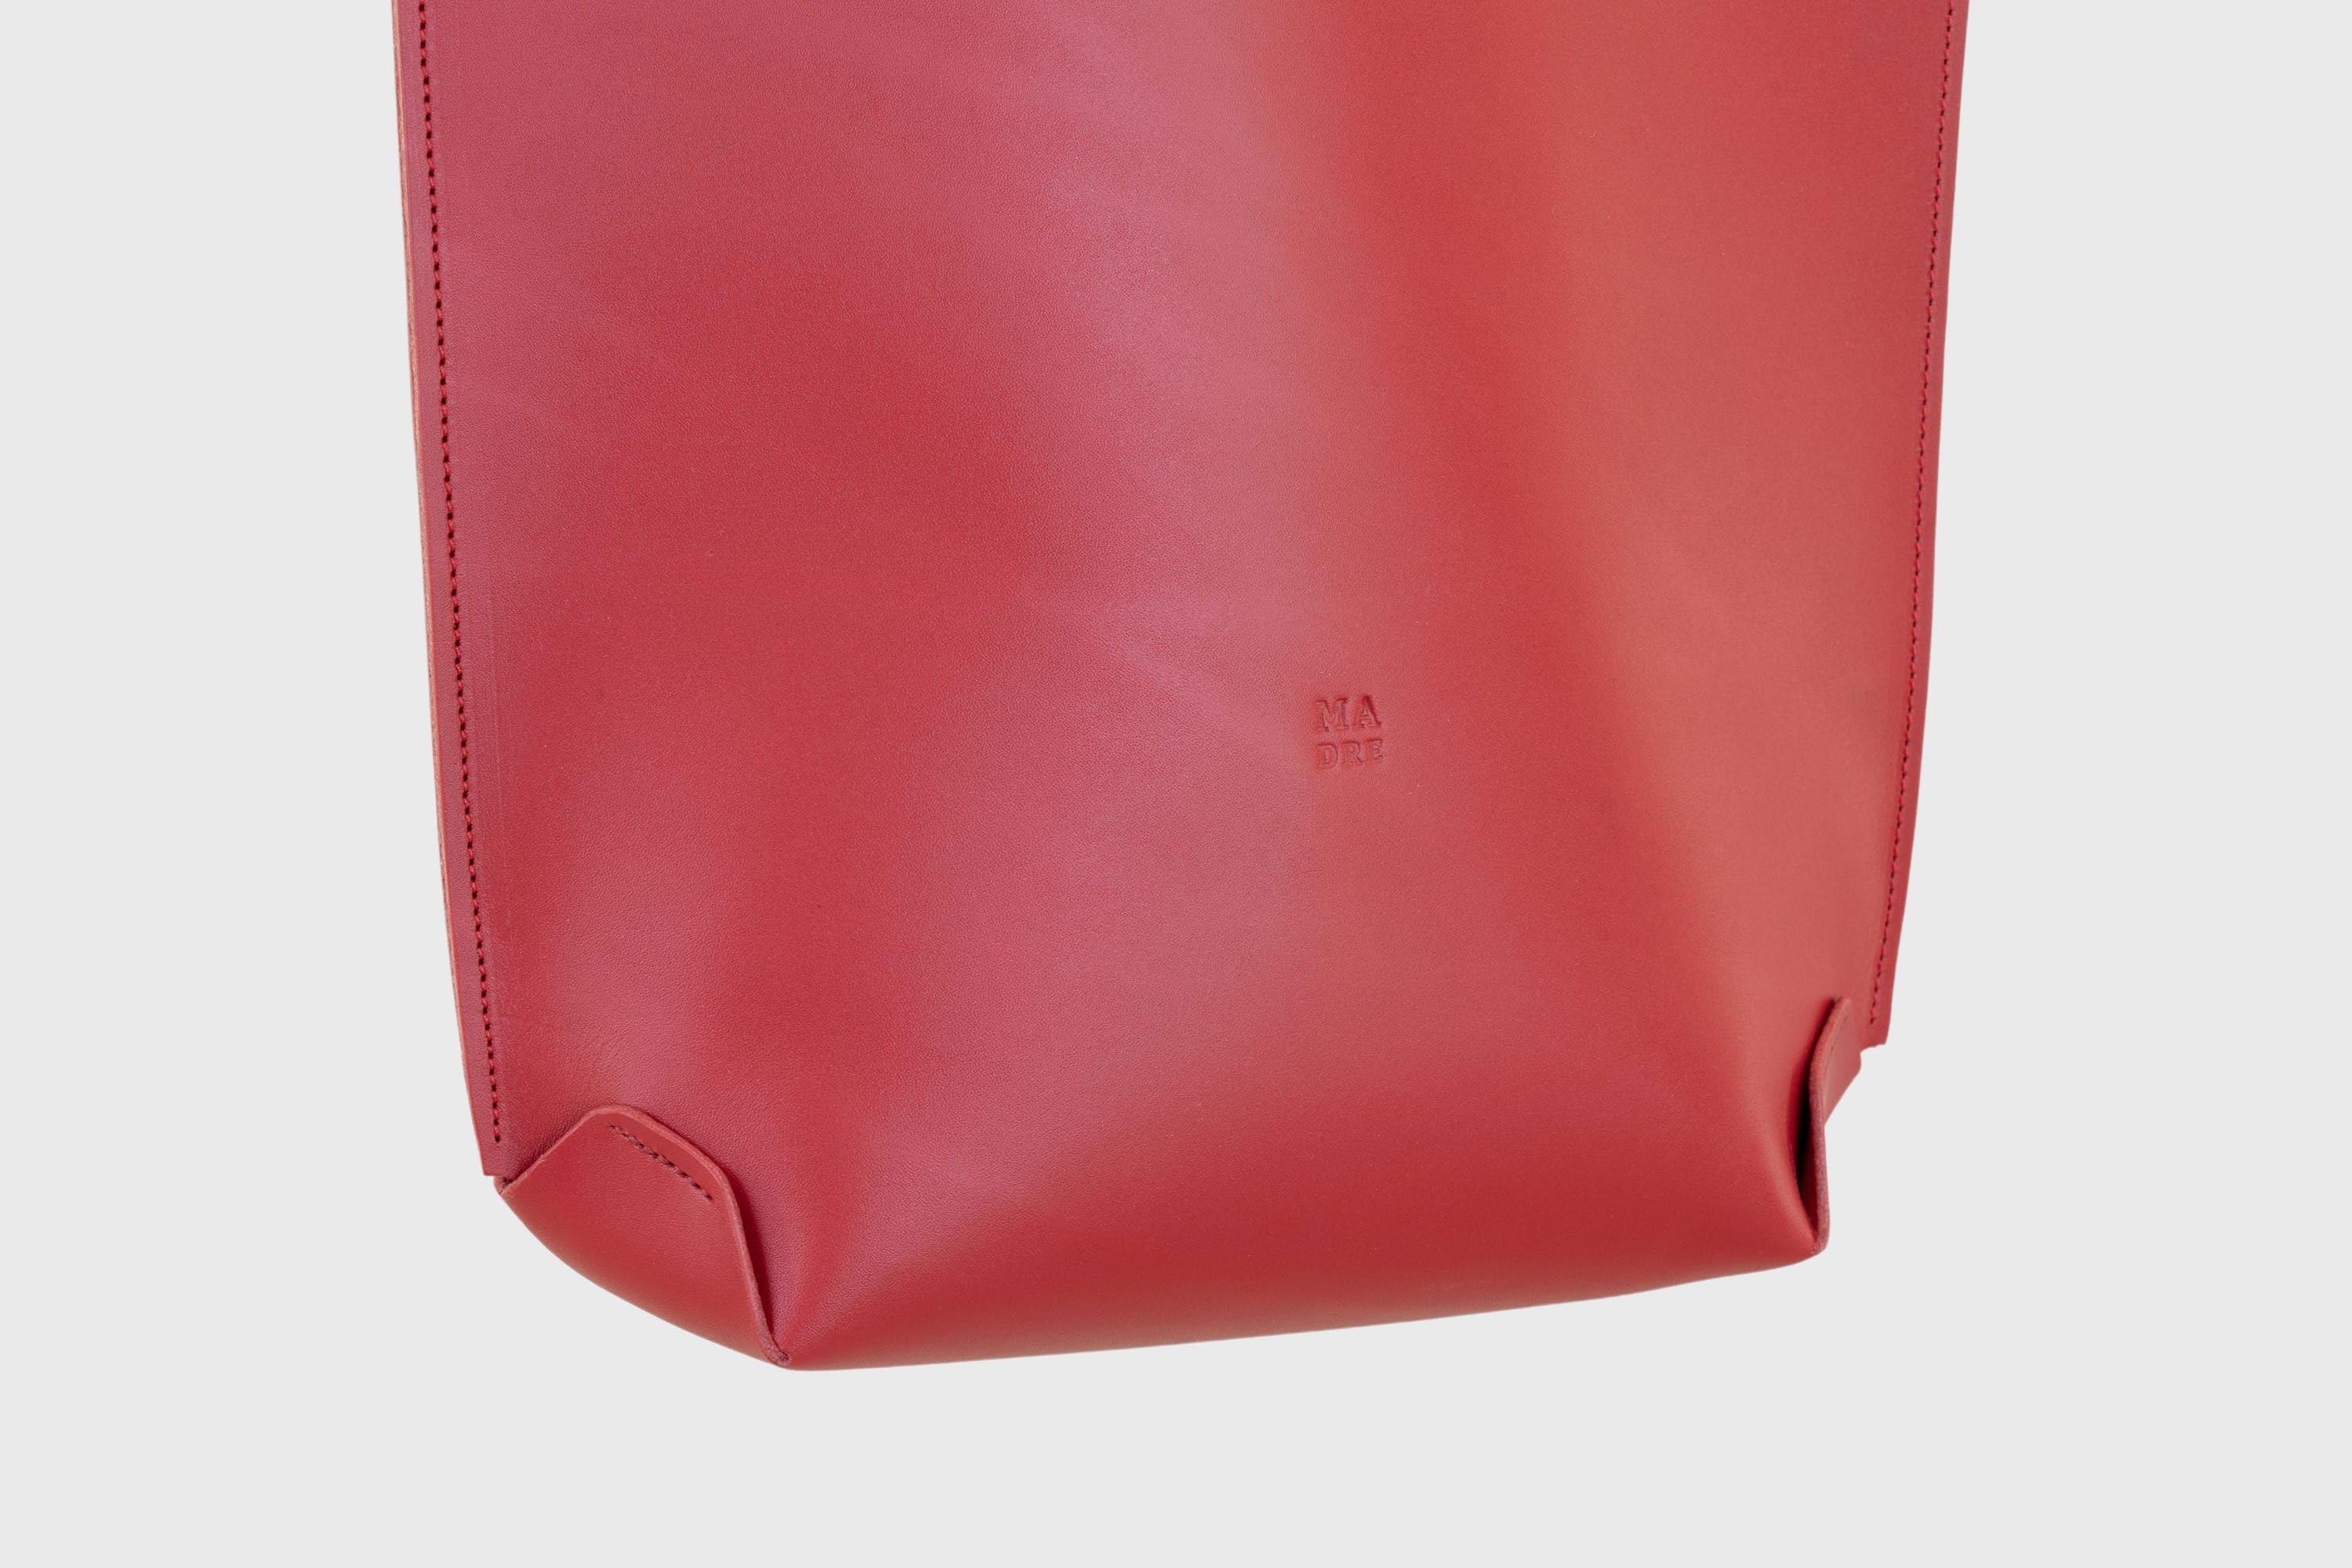 Oversized Tote Bag Red Leather Vegetable Tanned Leather Novillo Handstitched Quality Design By Manuel Dreesmann Atelier Madre Barcelona Spain